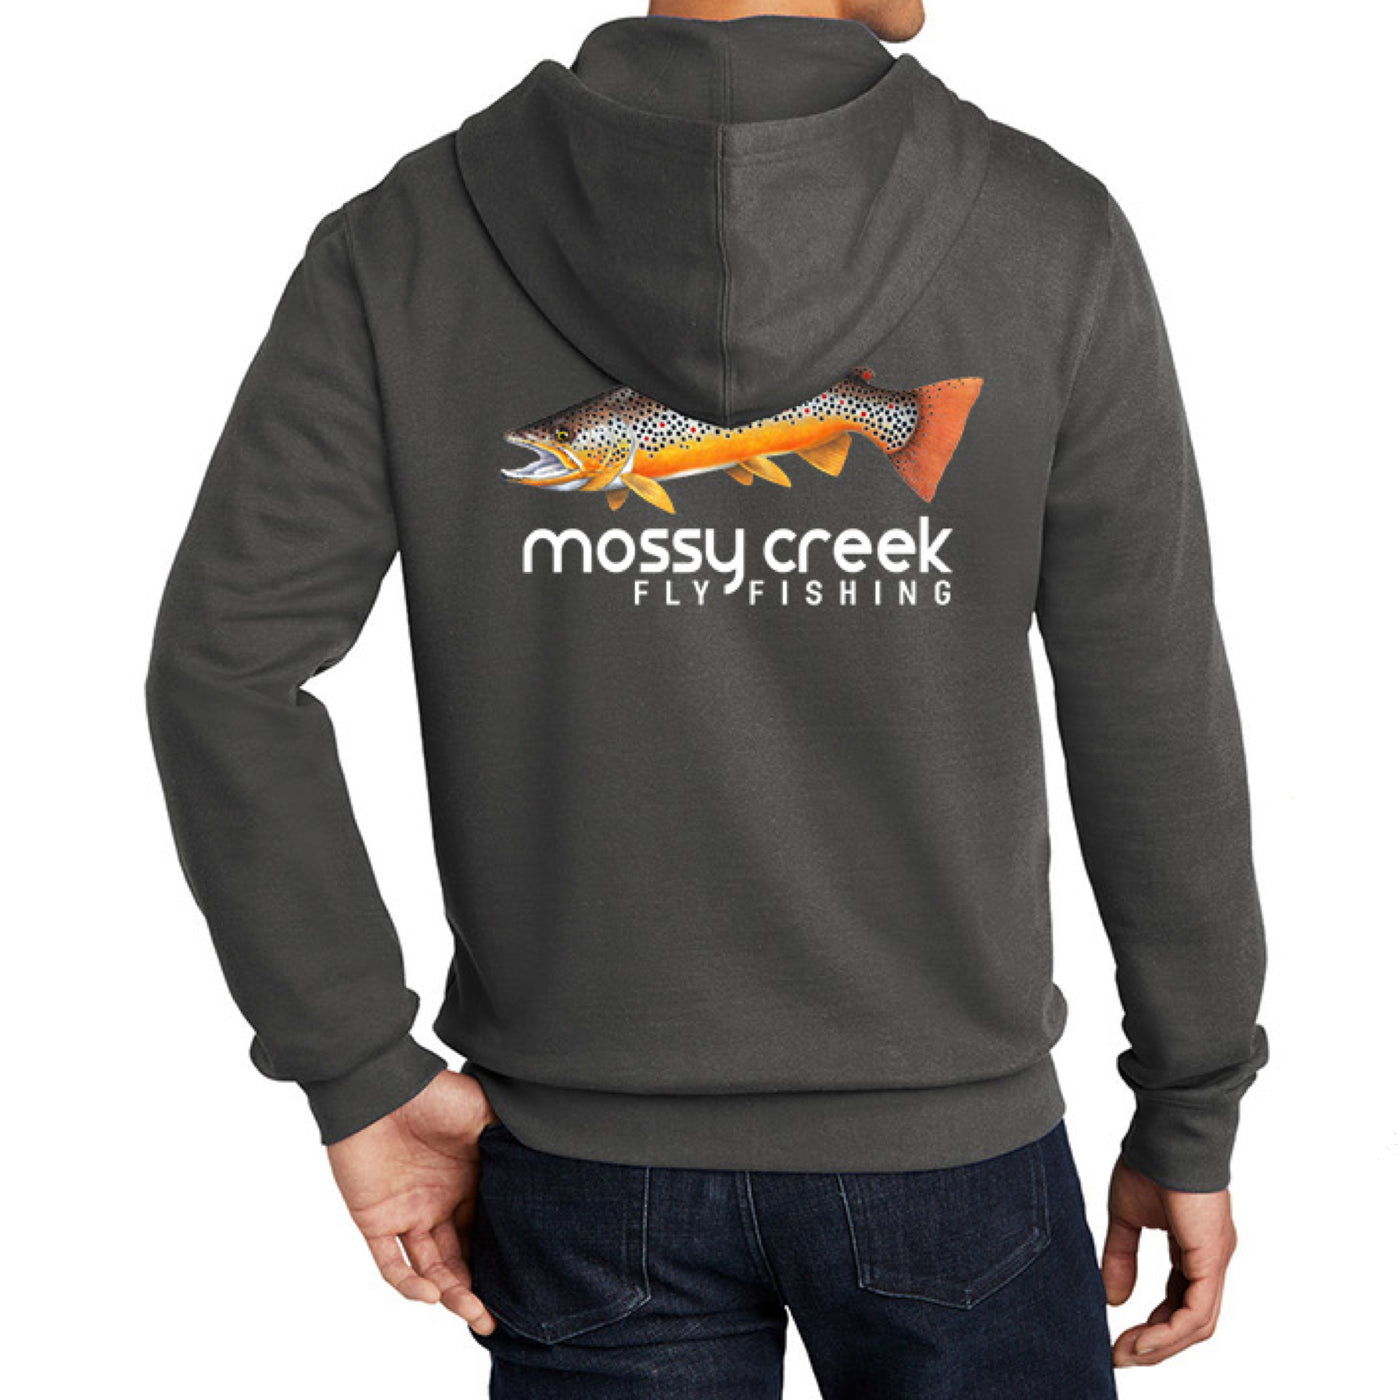 New Mossy Creek Zip Hoody Charcoal XXXL